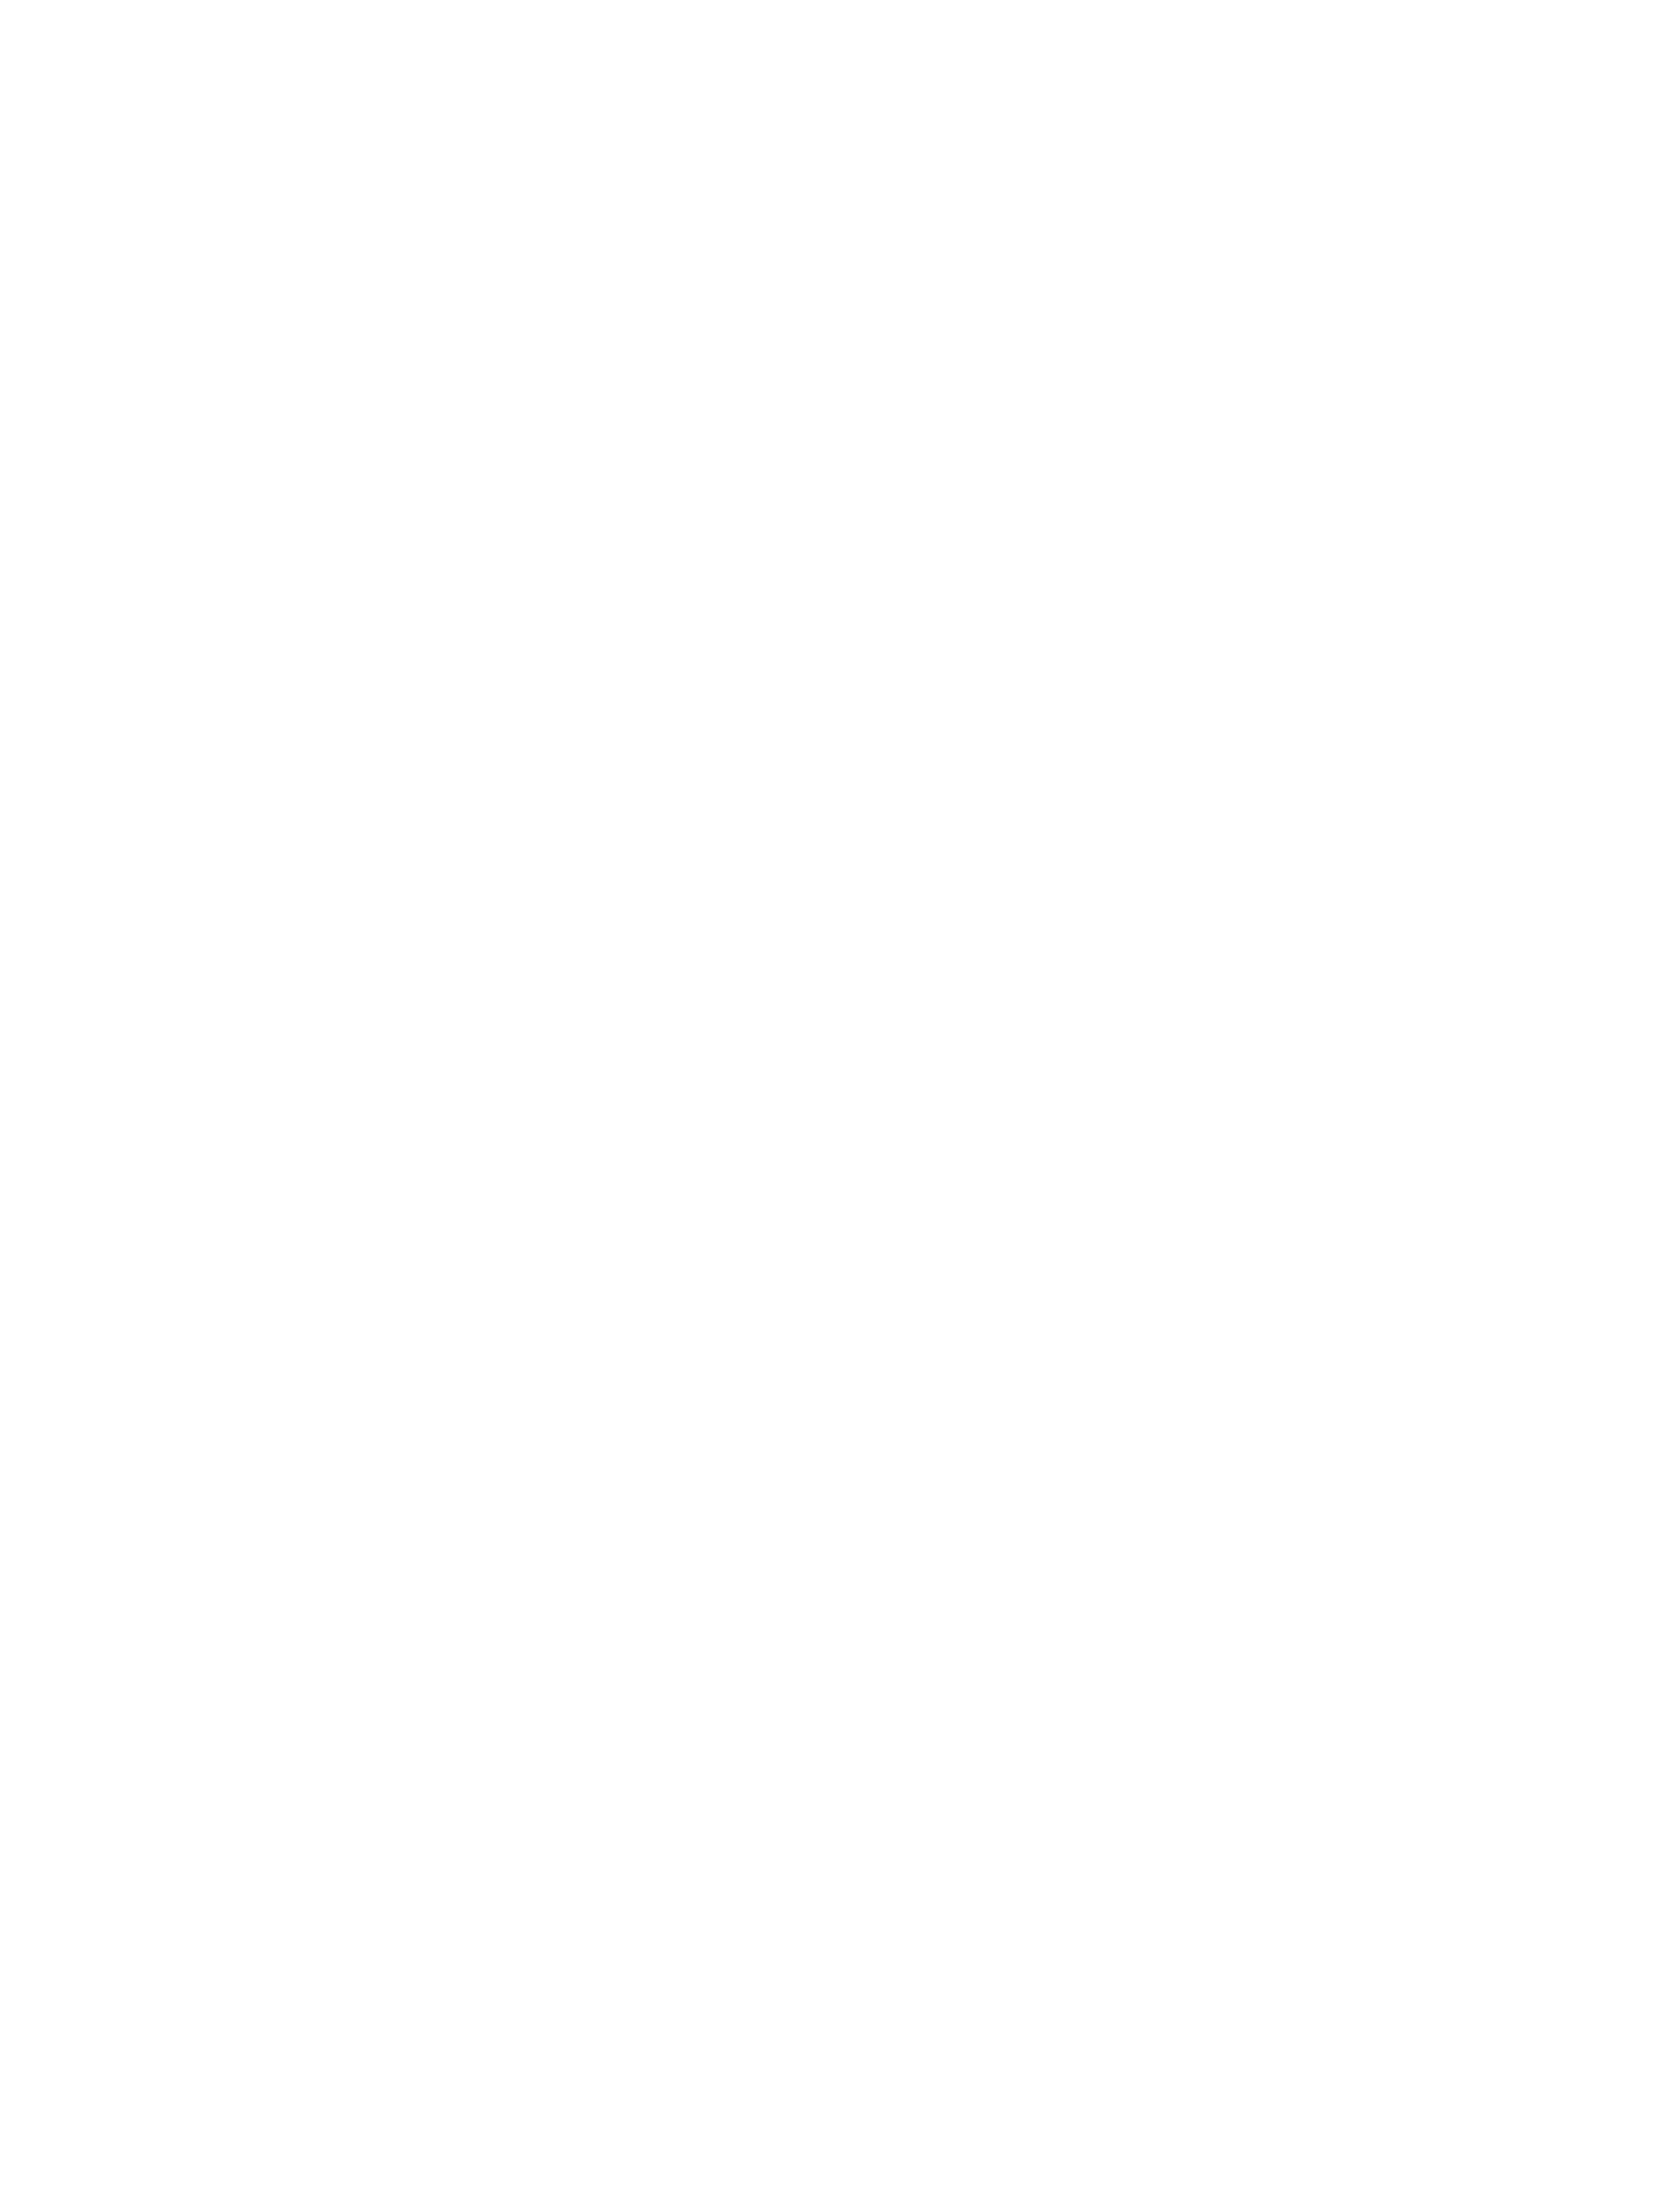 National Association of Realtors - Commercial Division